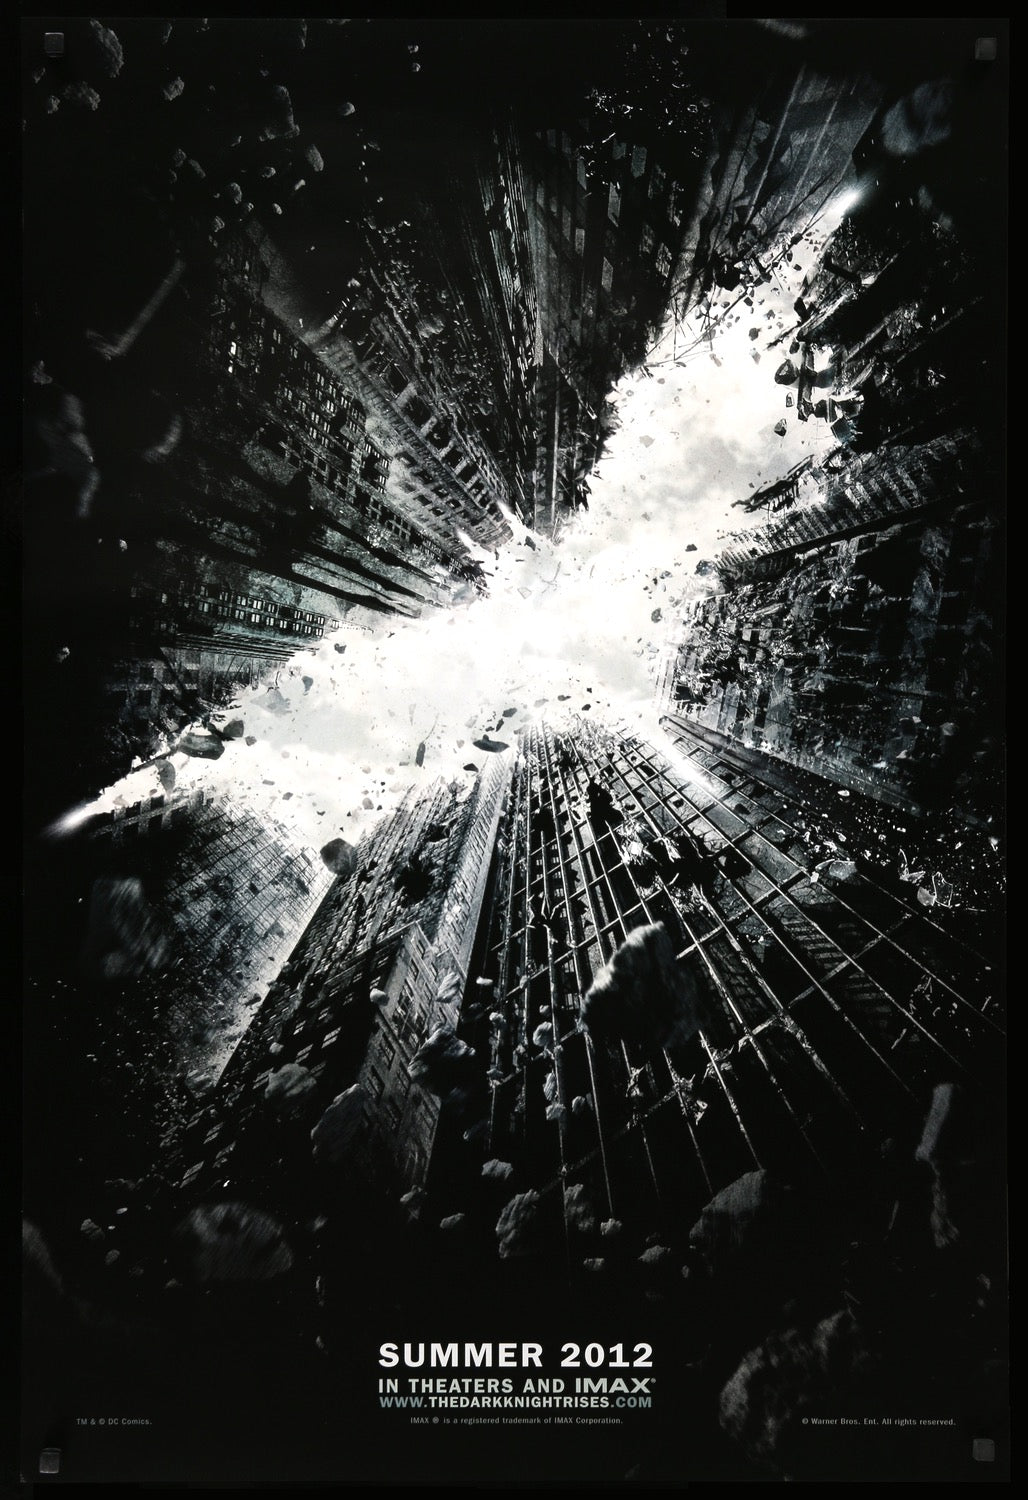 Dark Knight Rises (2012) original movie poster for sale at Original Film Art